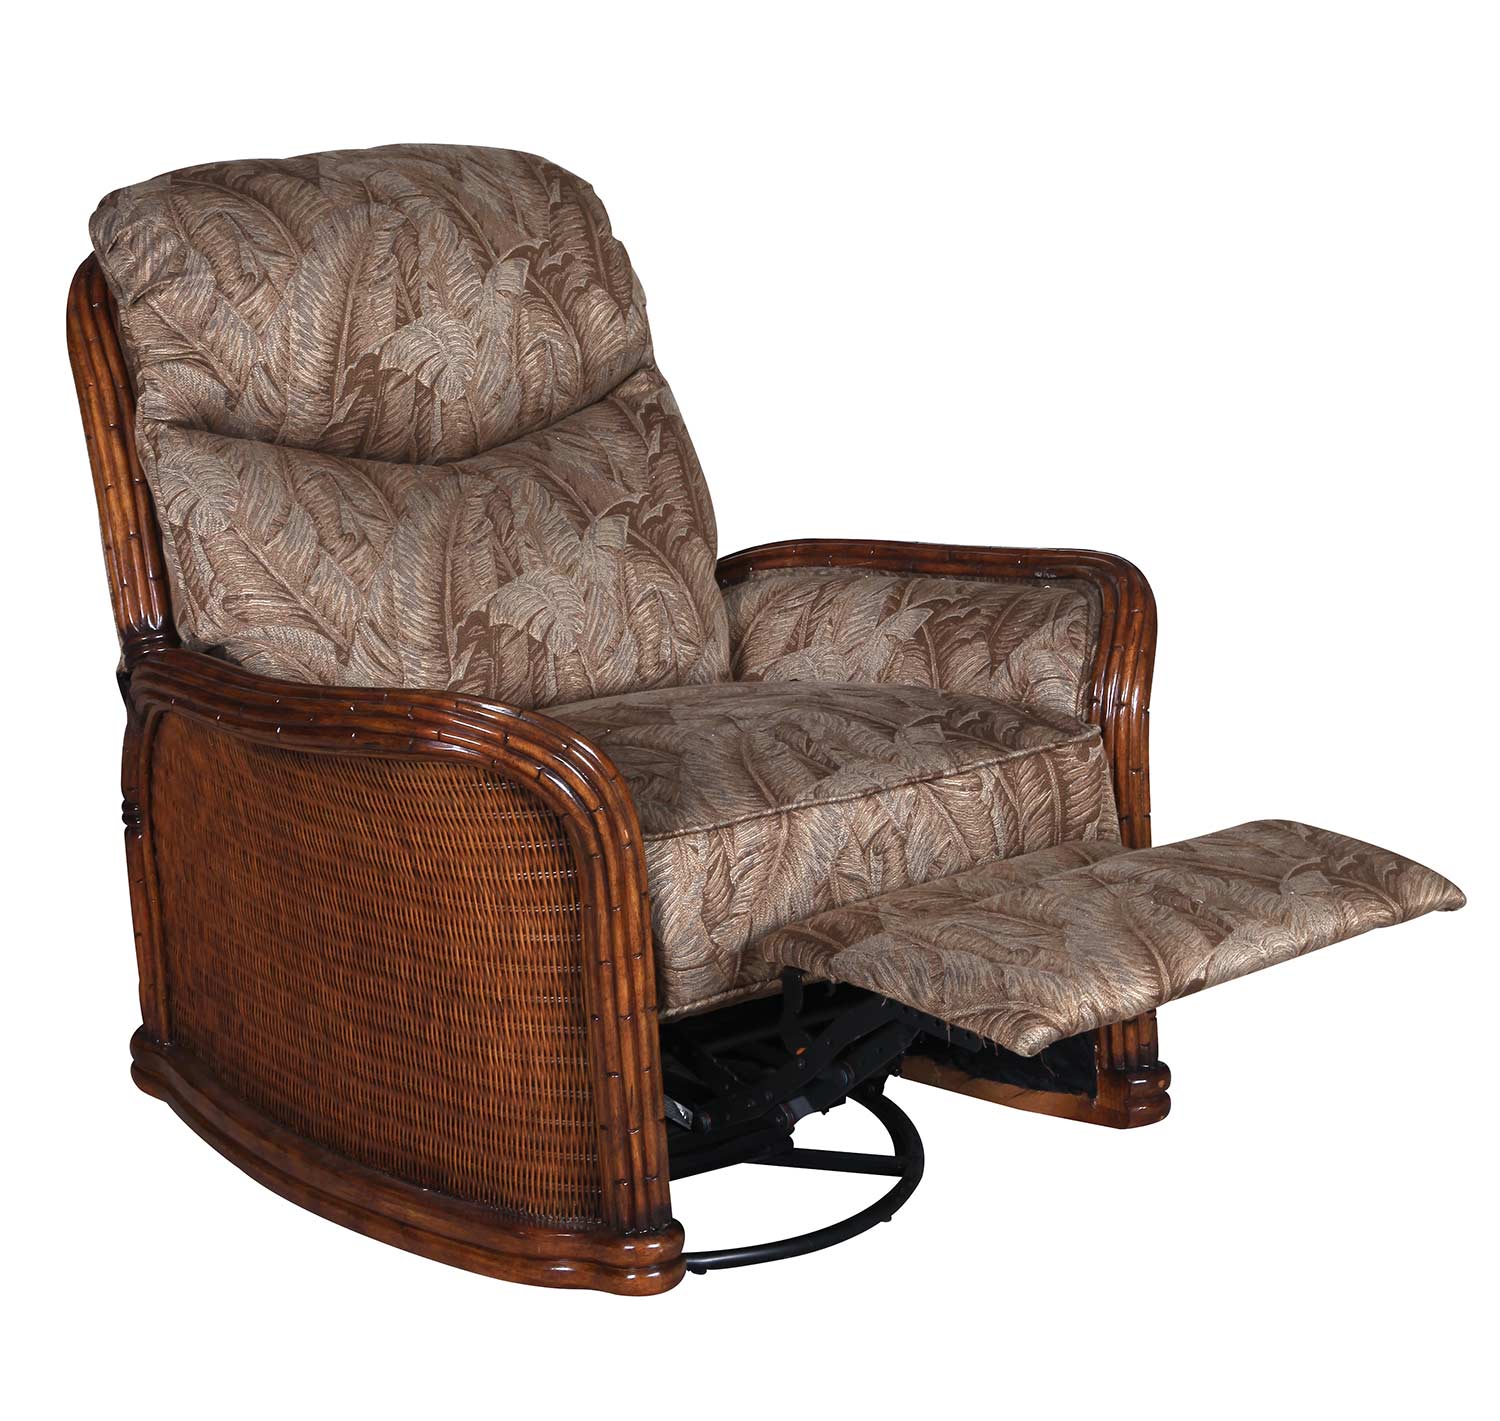 Barcalounger Pacifica ll Woodland Reserve Recliner Chair